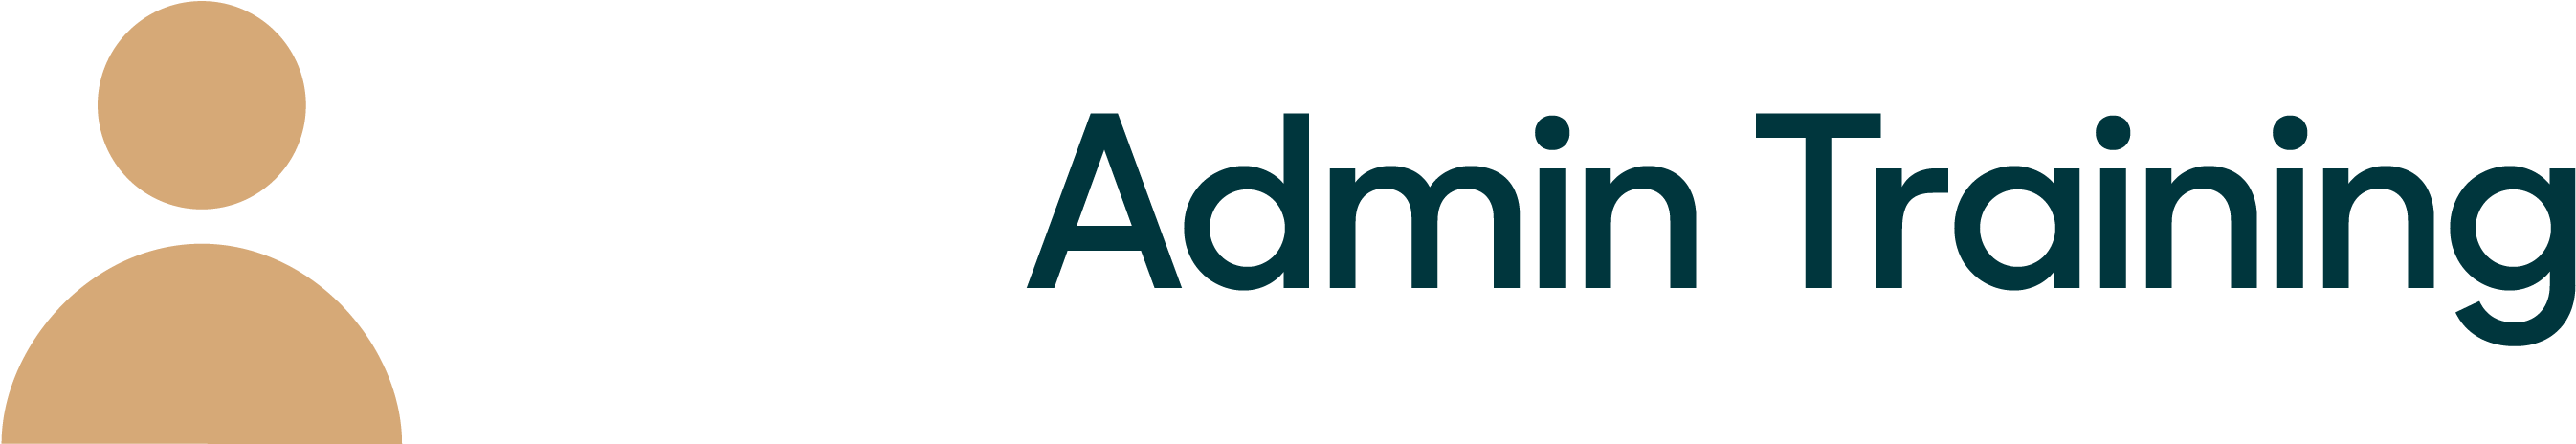 Admin Training Logo PNG